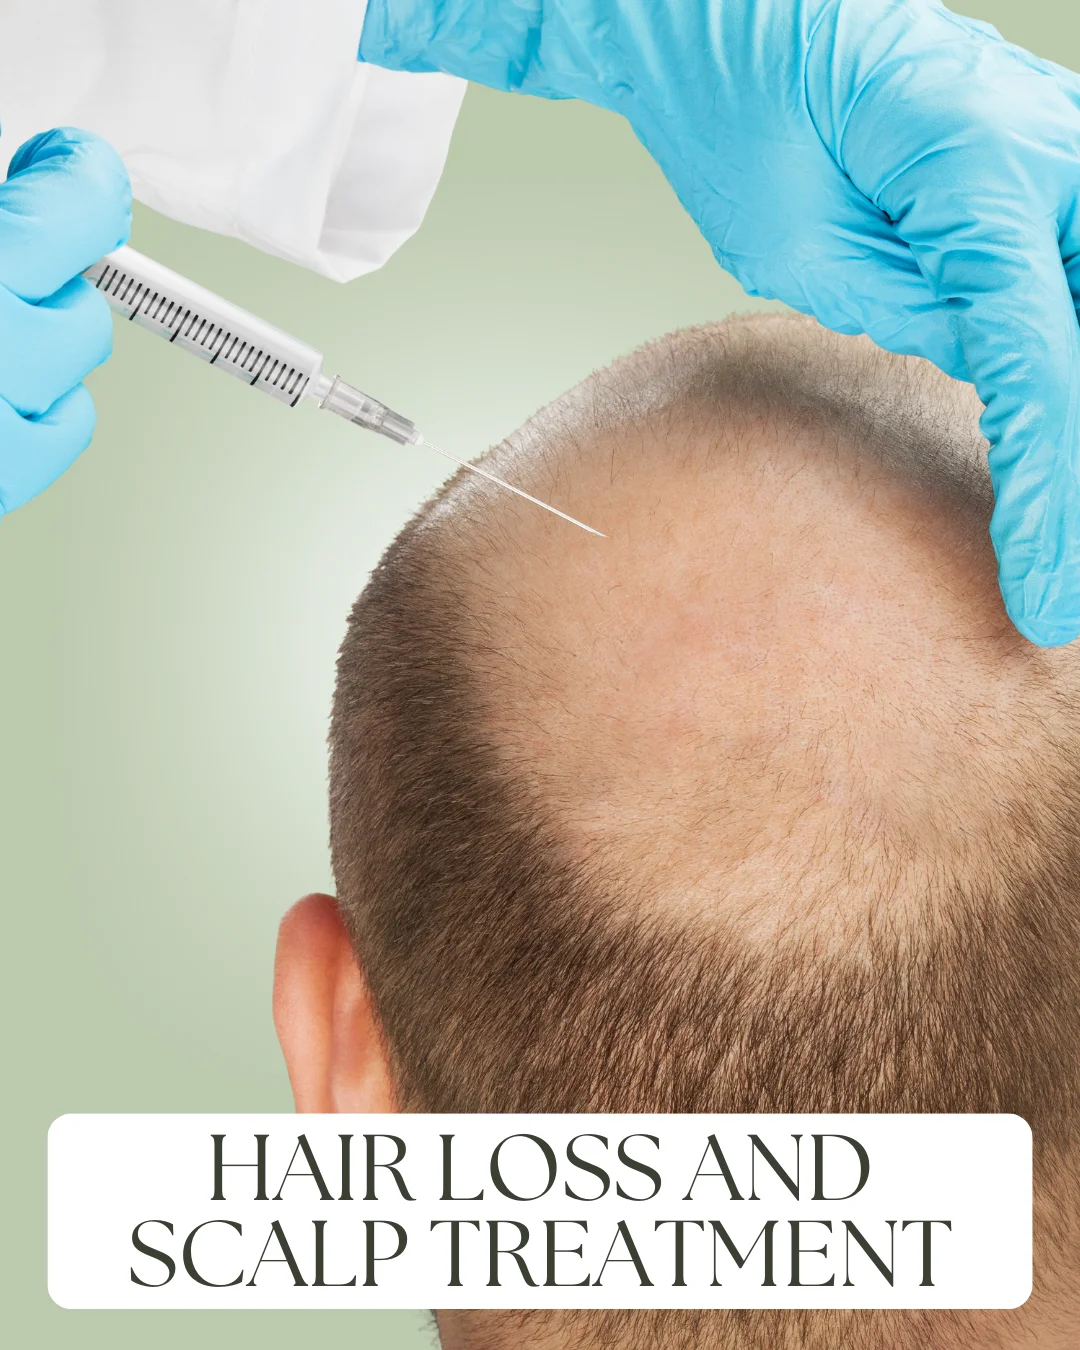 HAIR LOSS AND SCALP TREATMENT